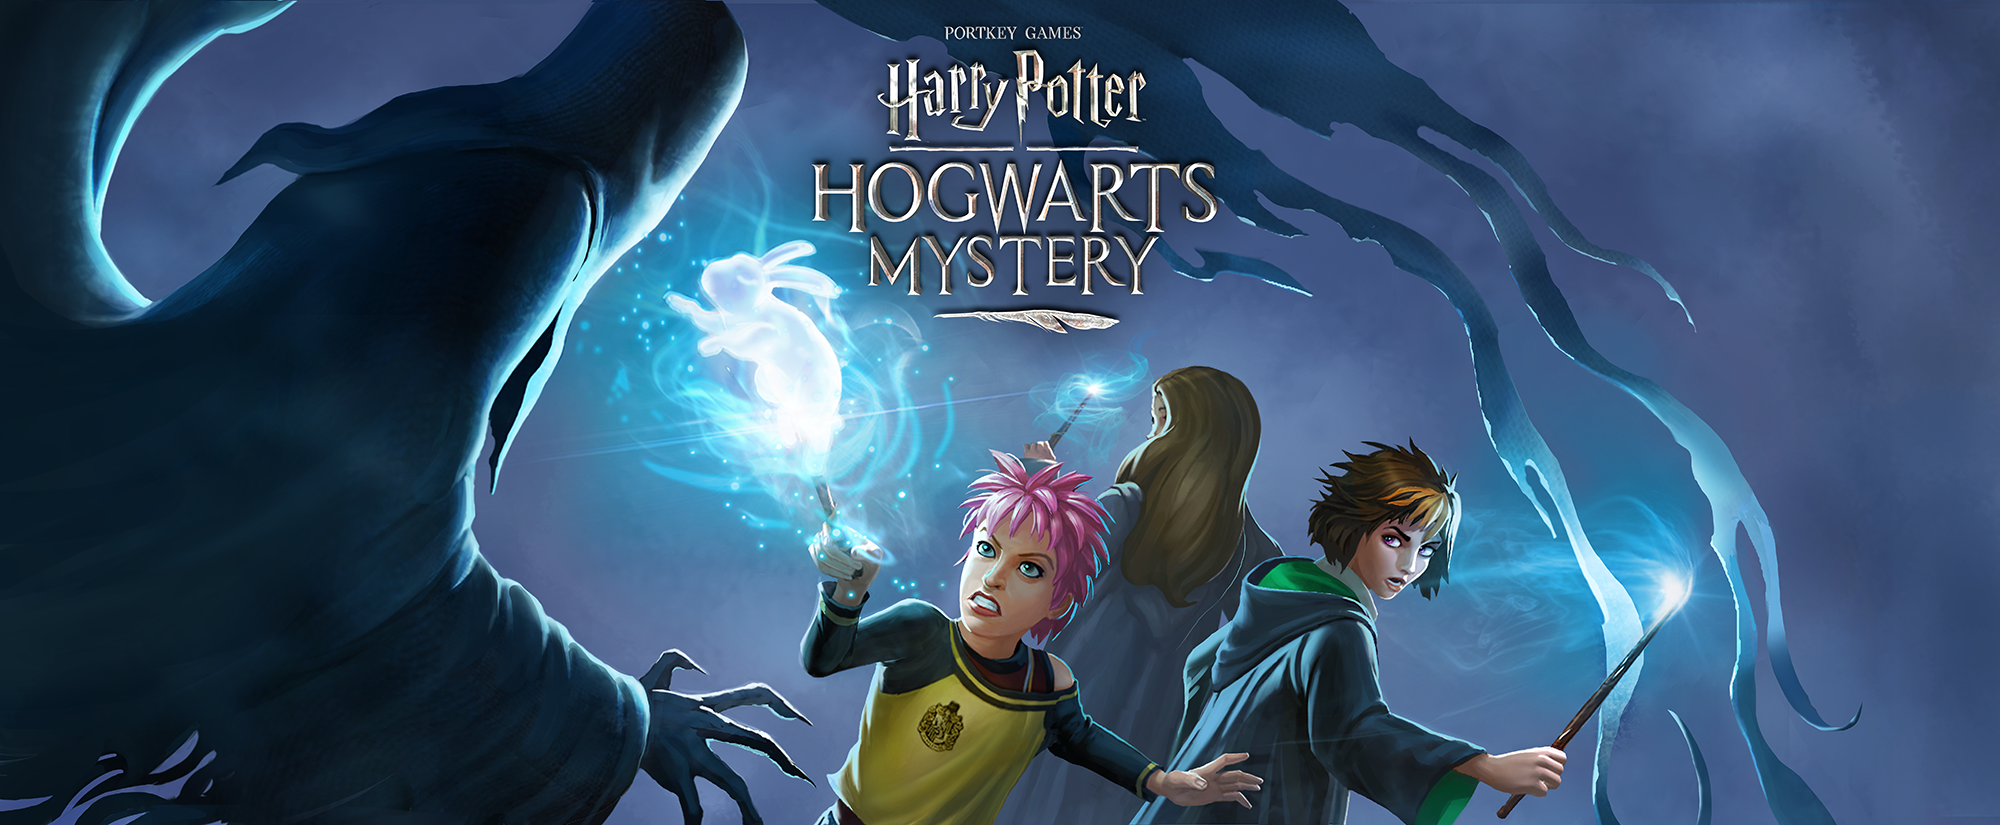 Harry Potter Hogwarts Mystery Patronus